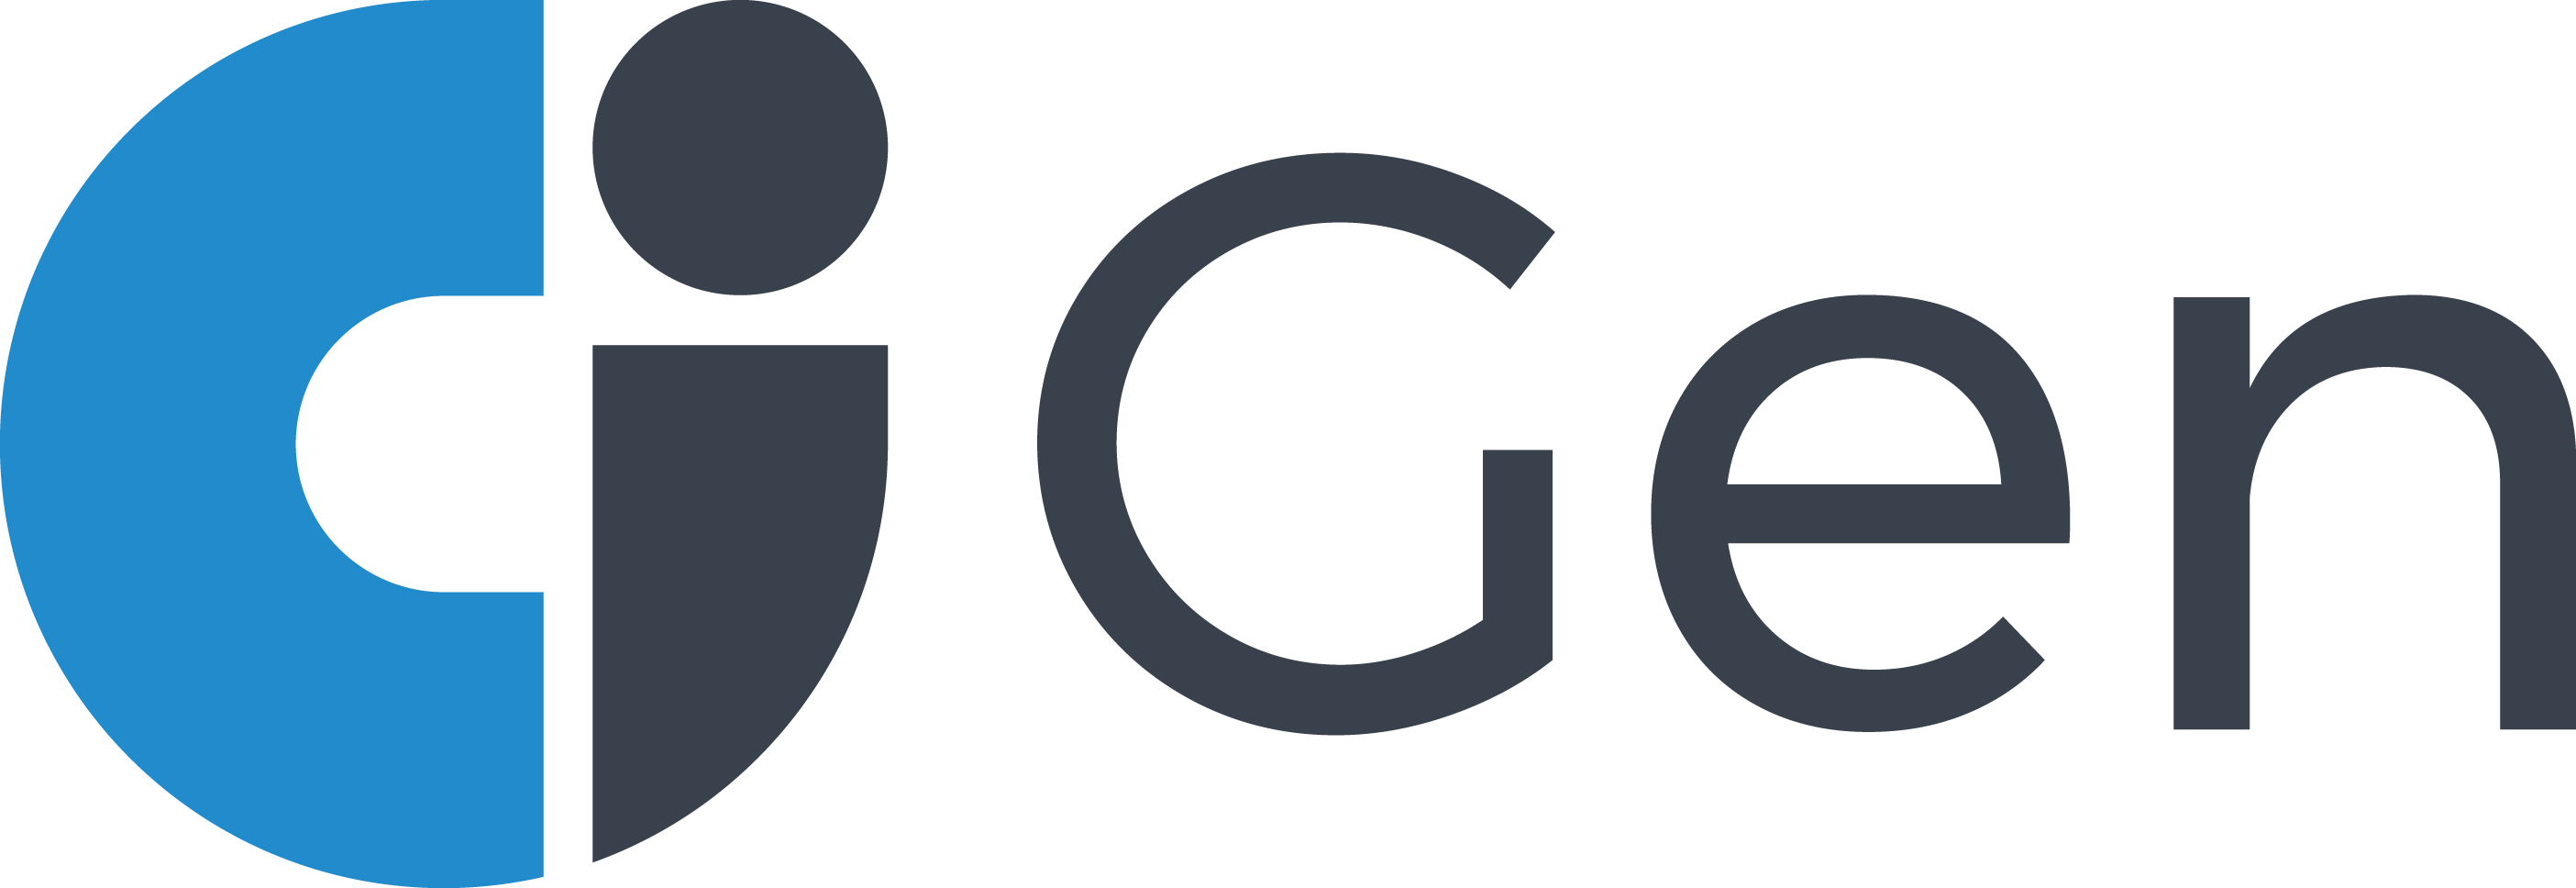 CIGen company logo